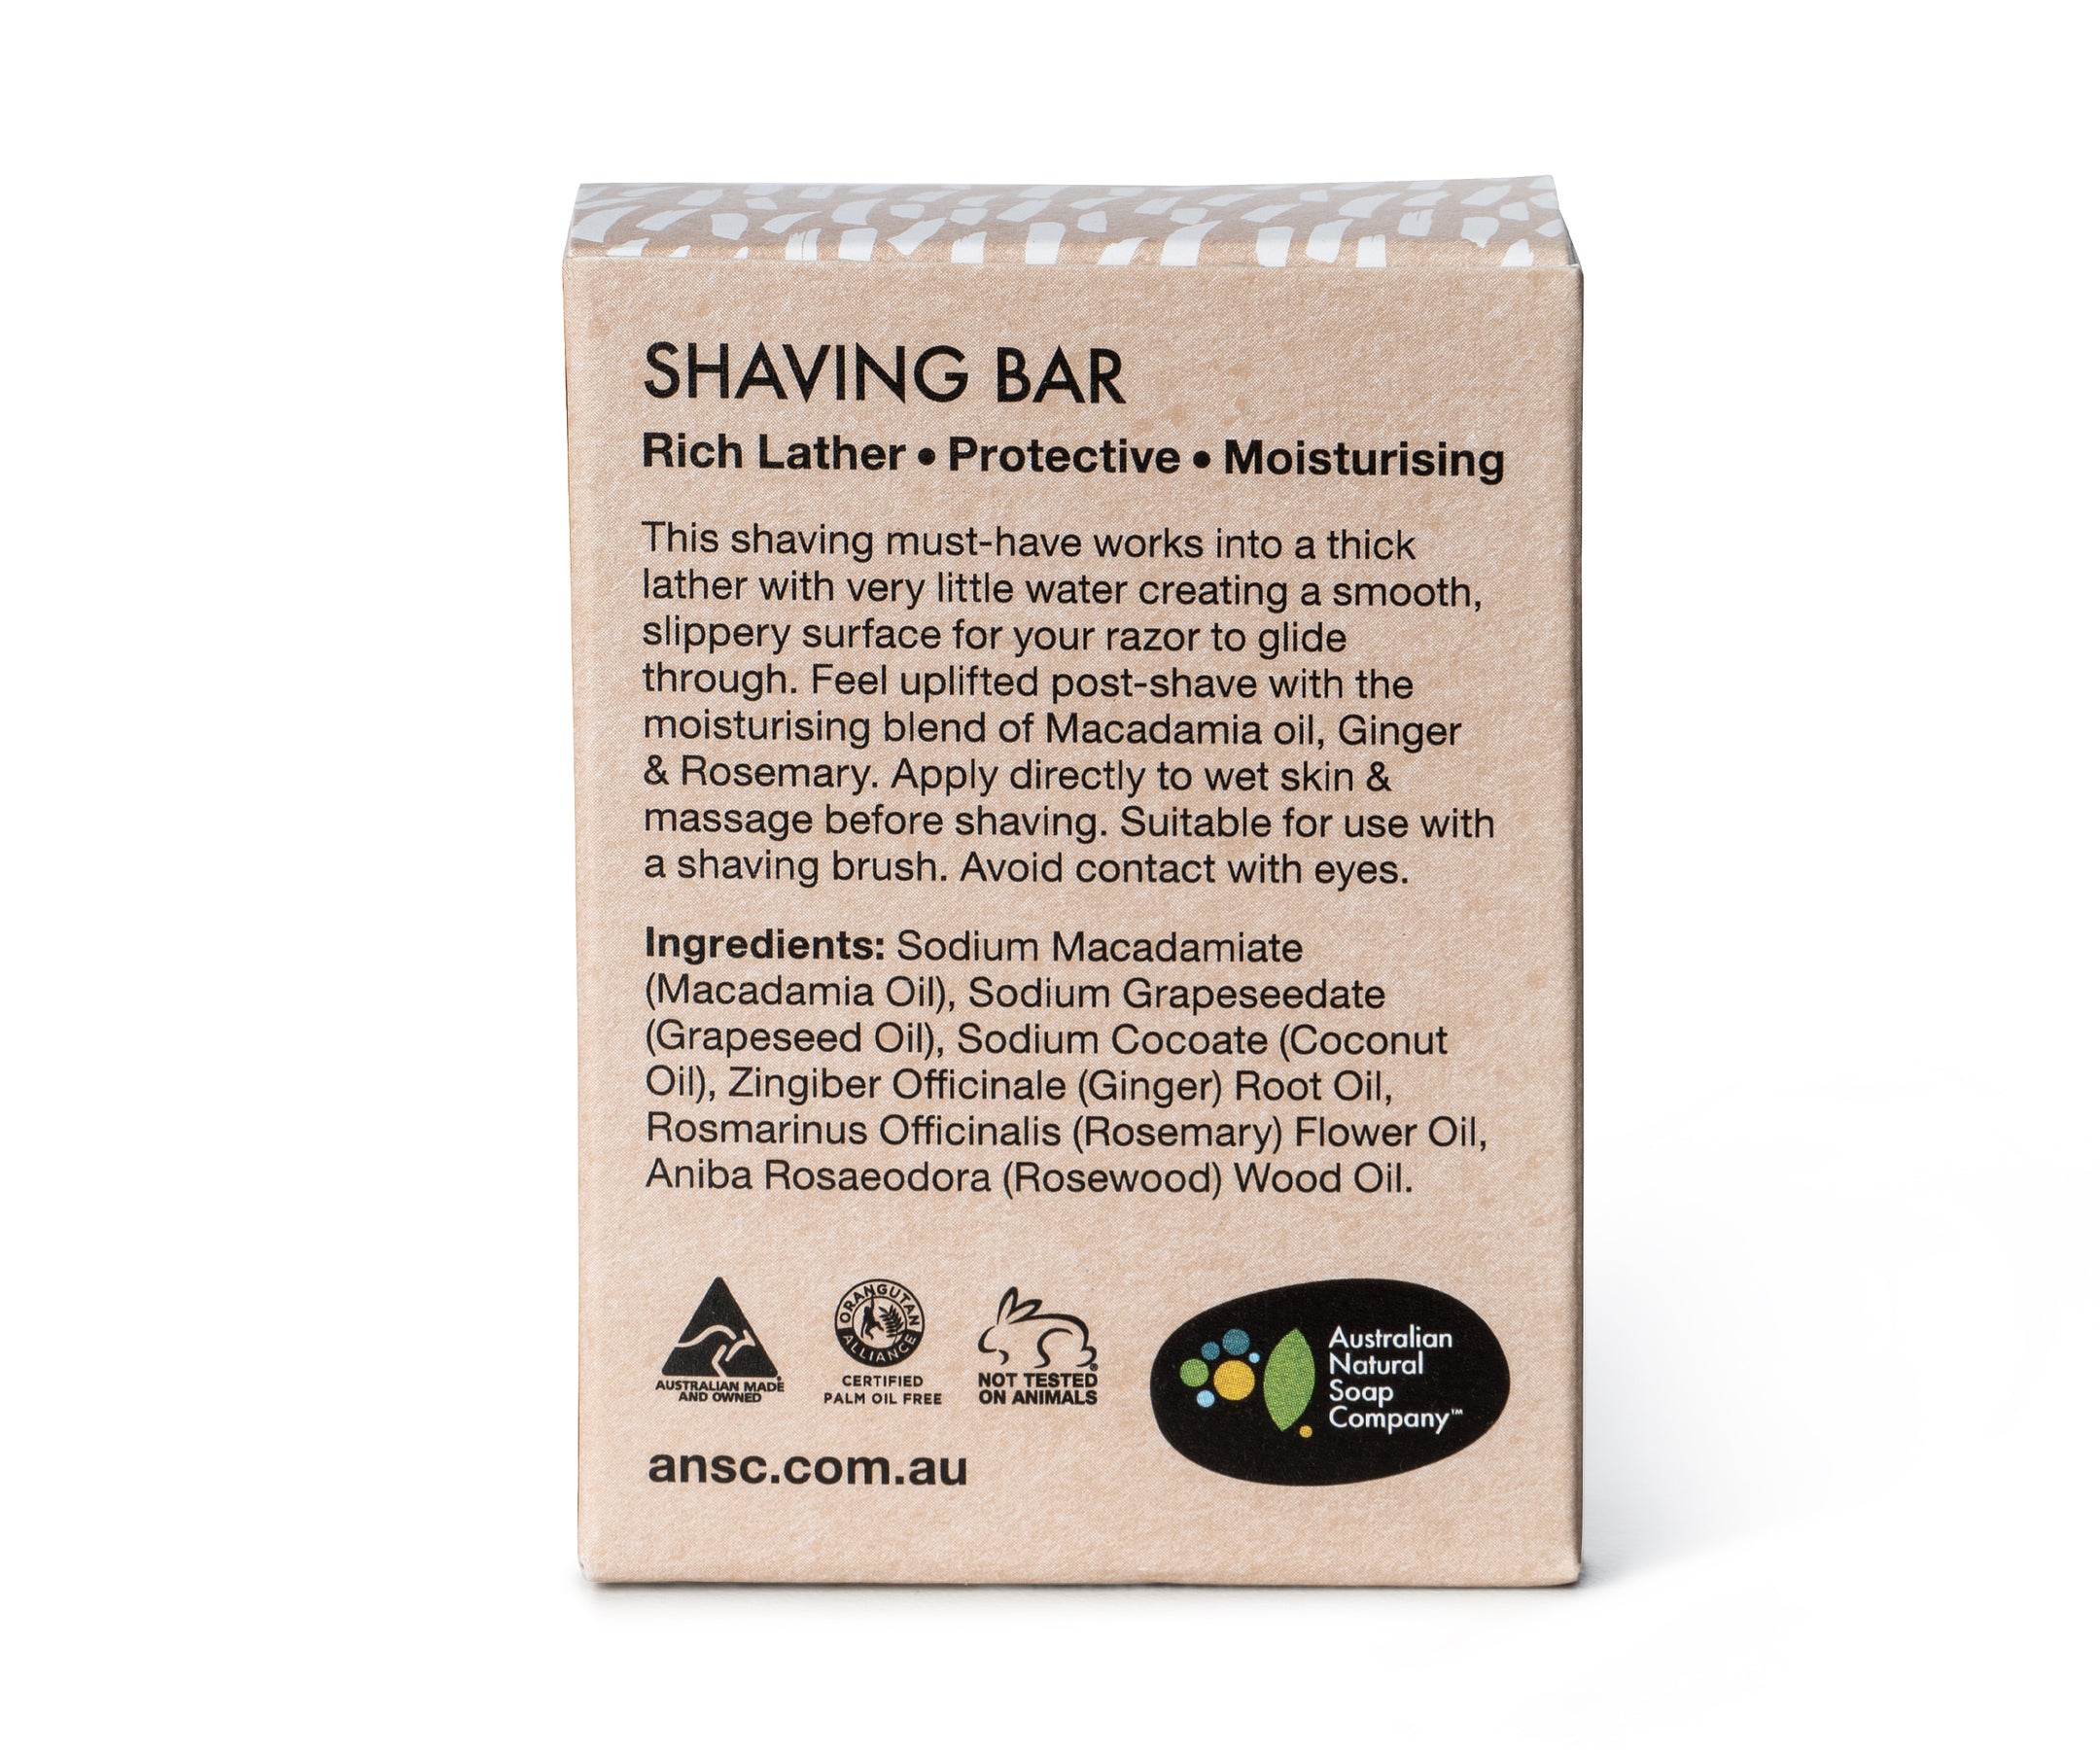 Australian Natural Soap Company shaving bar back of box